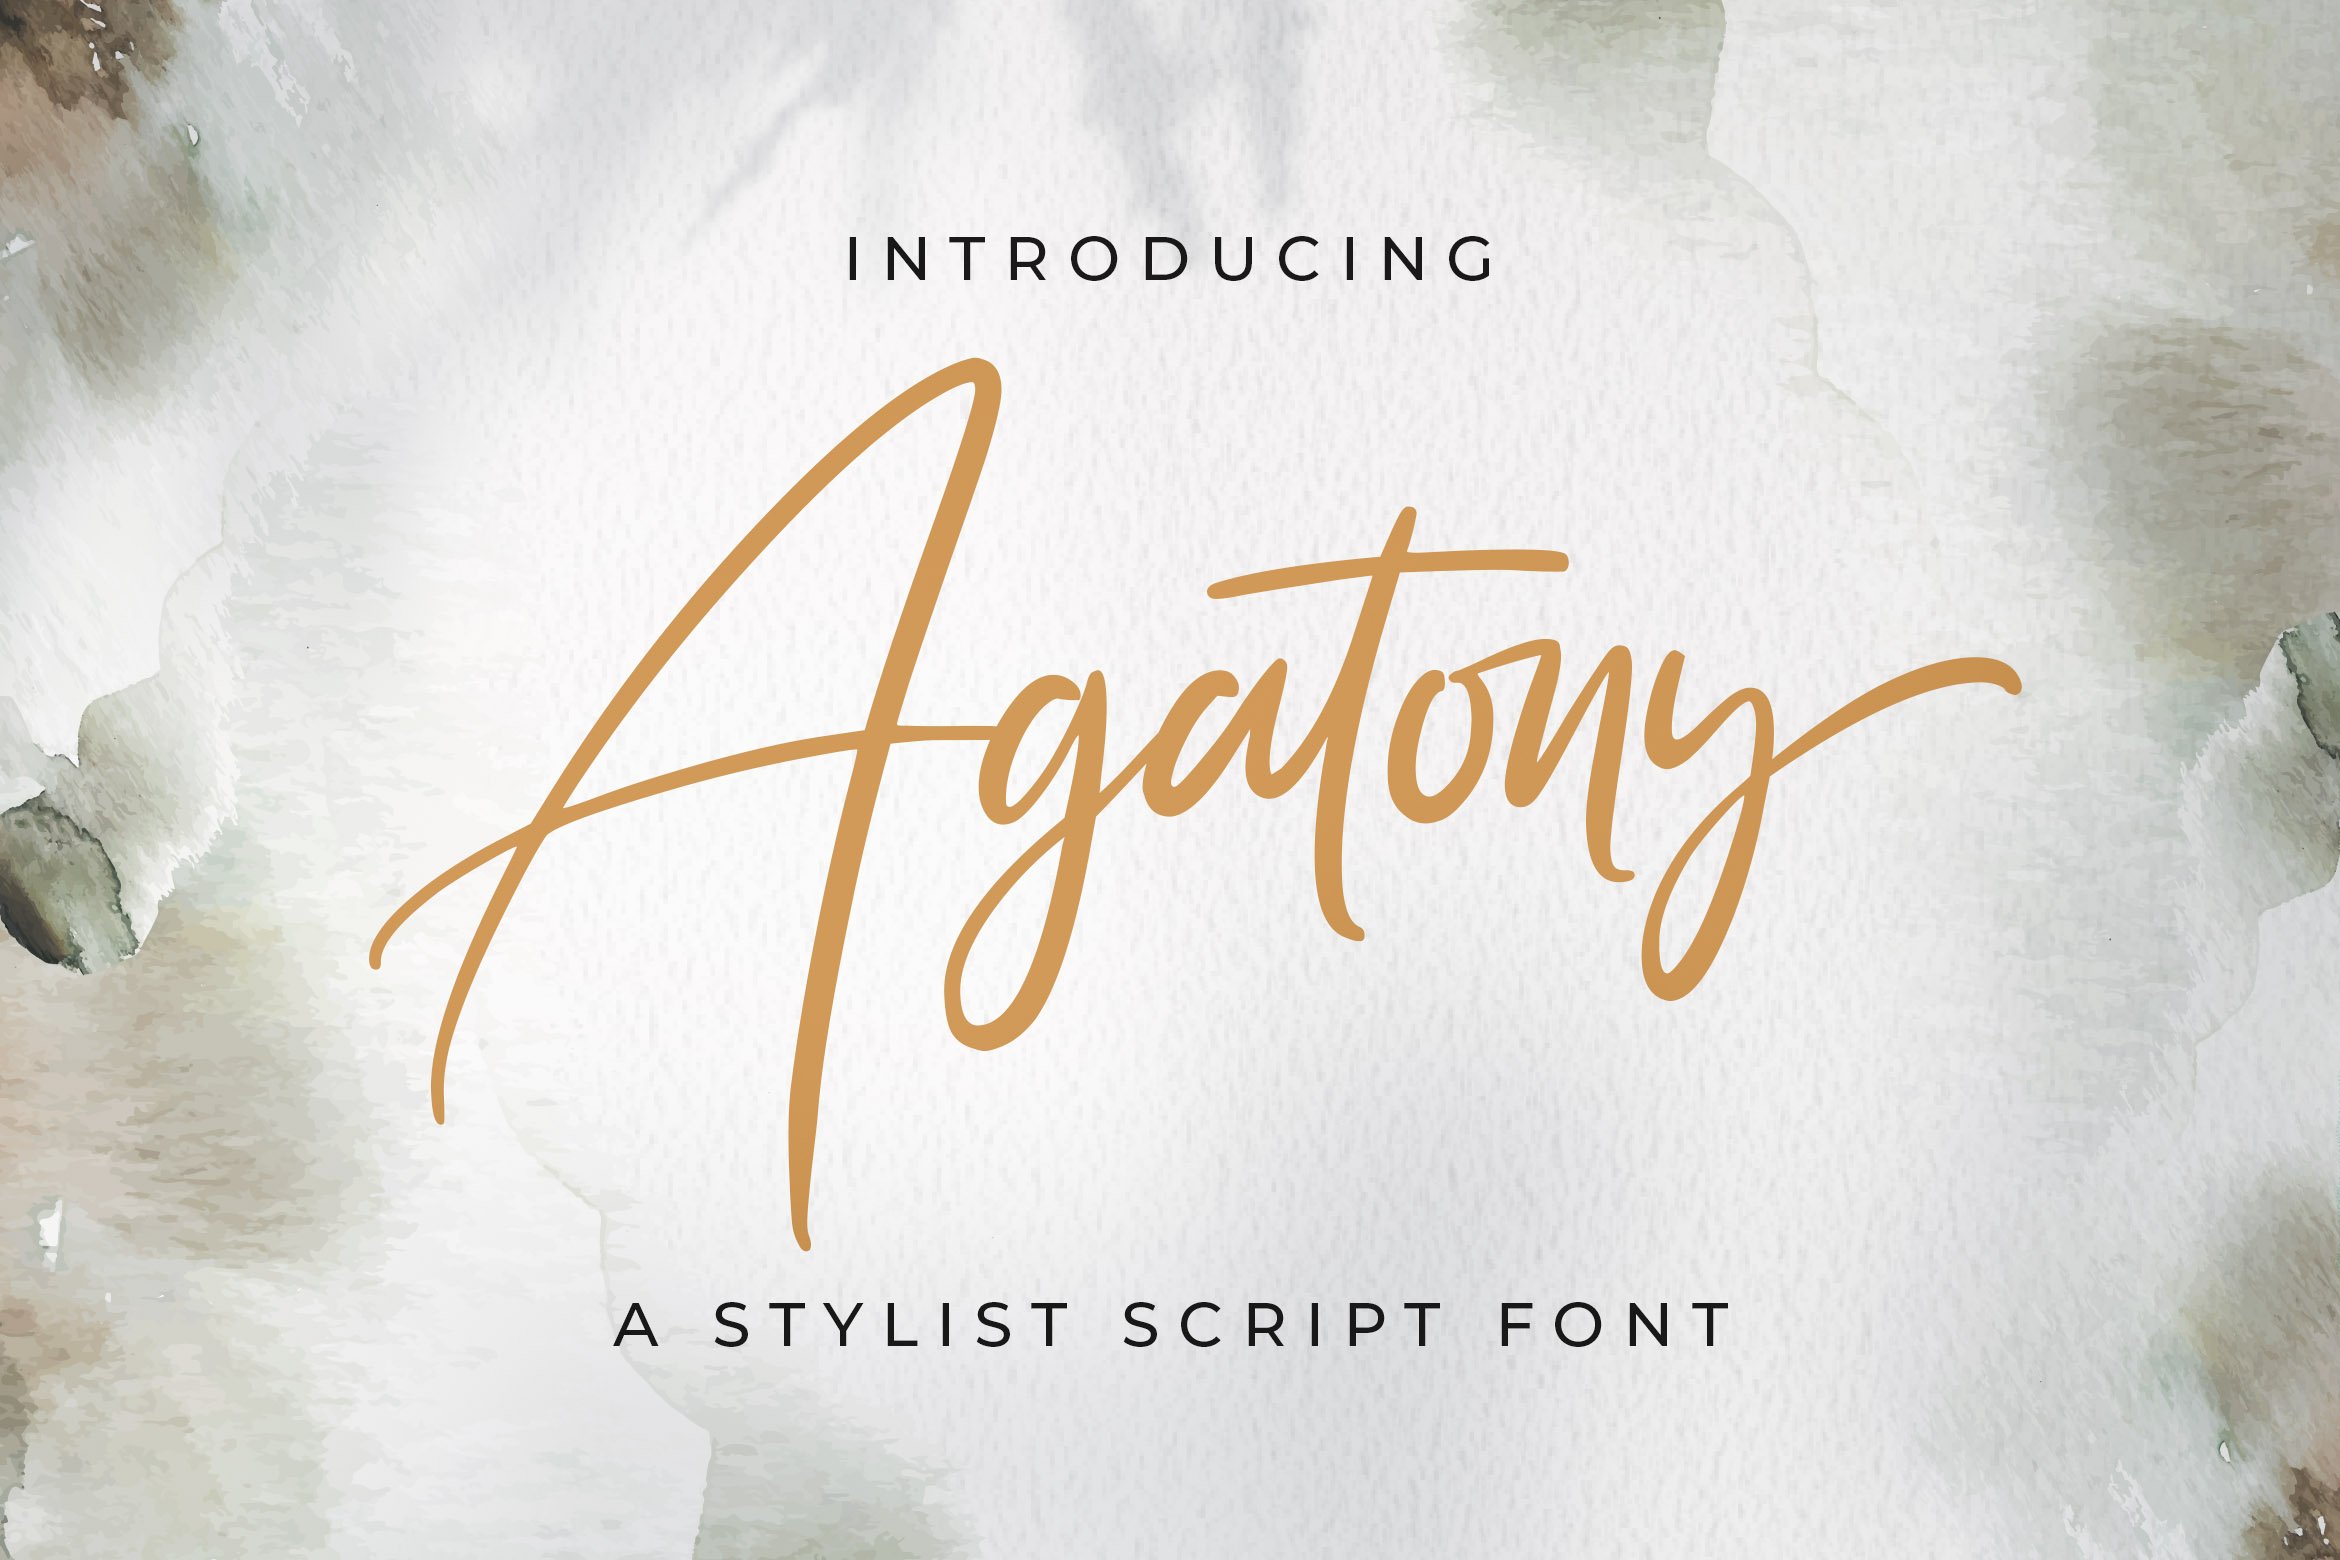 Agatony - Handwritten Font cover image.